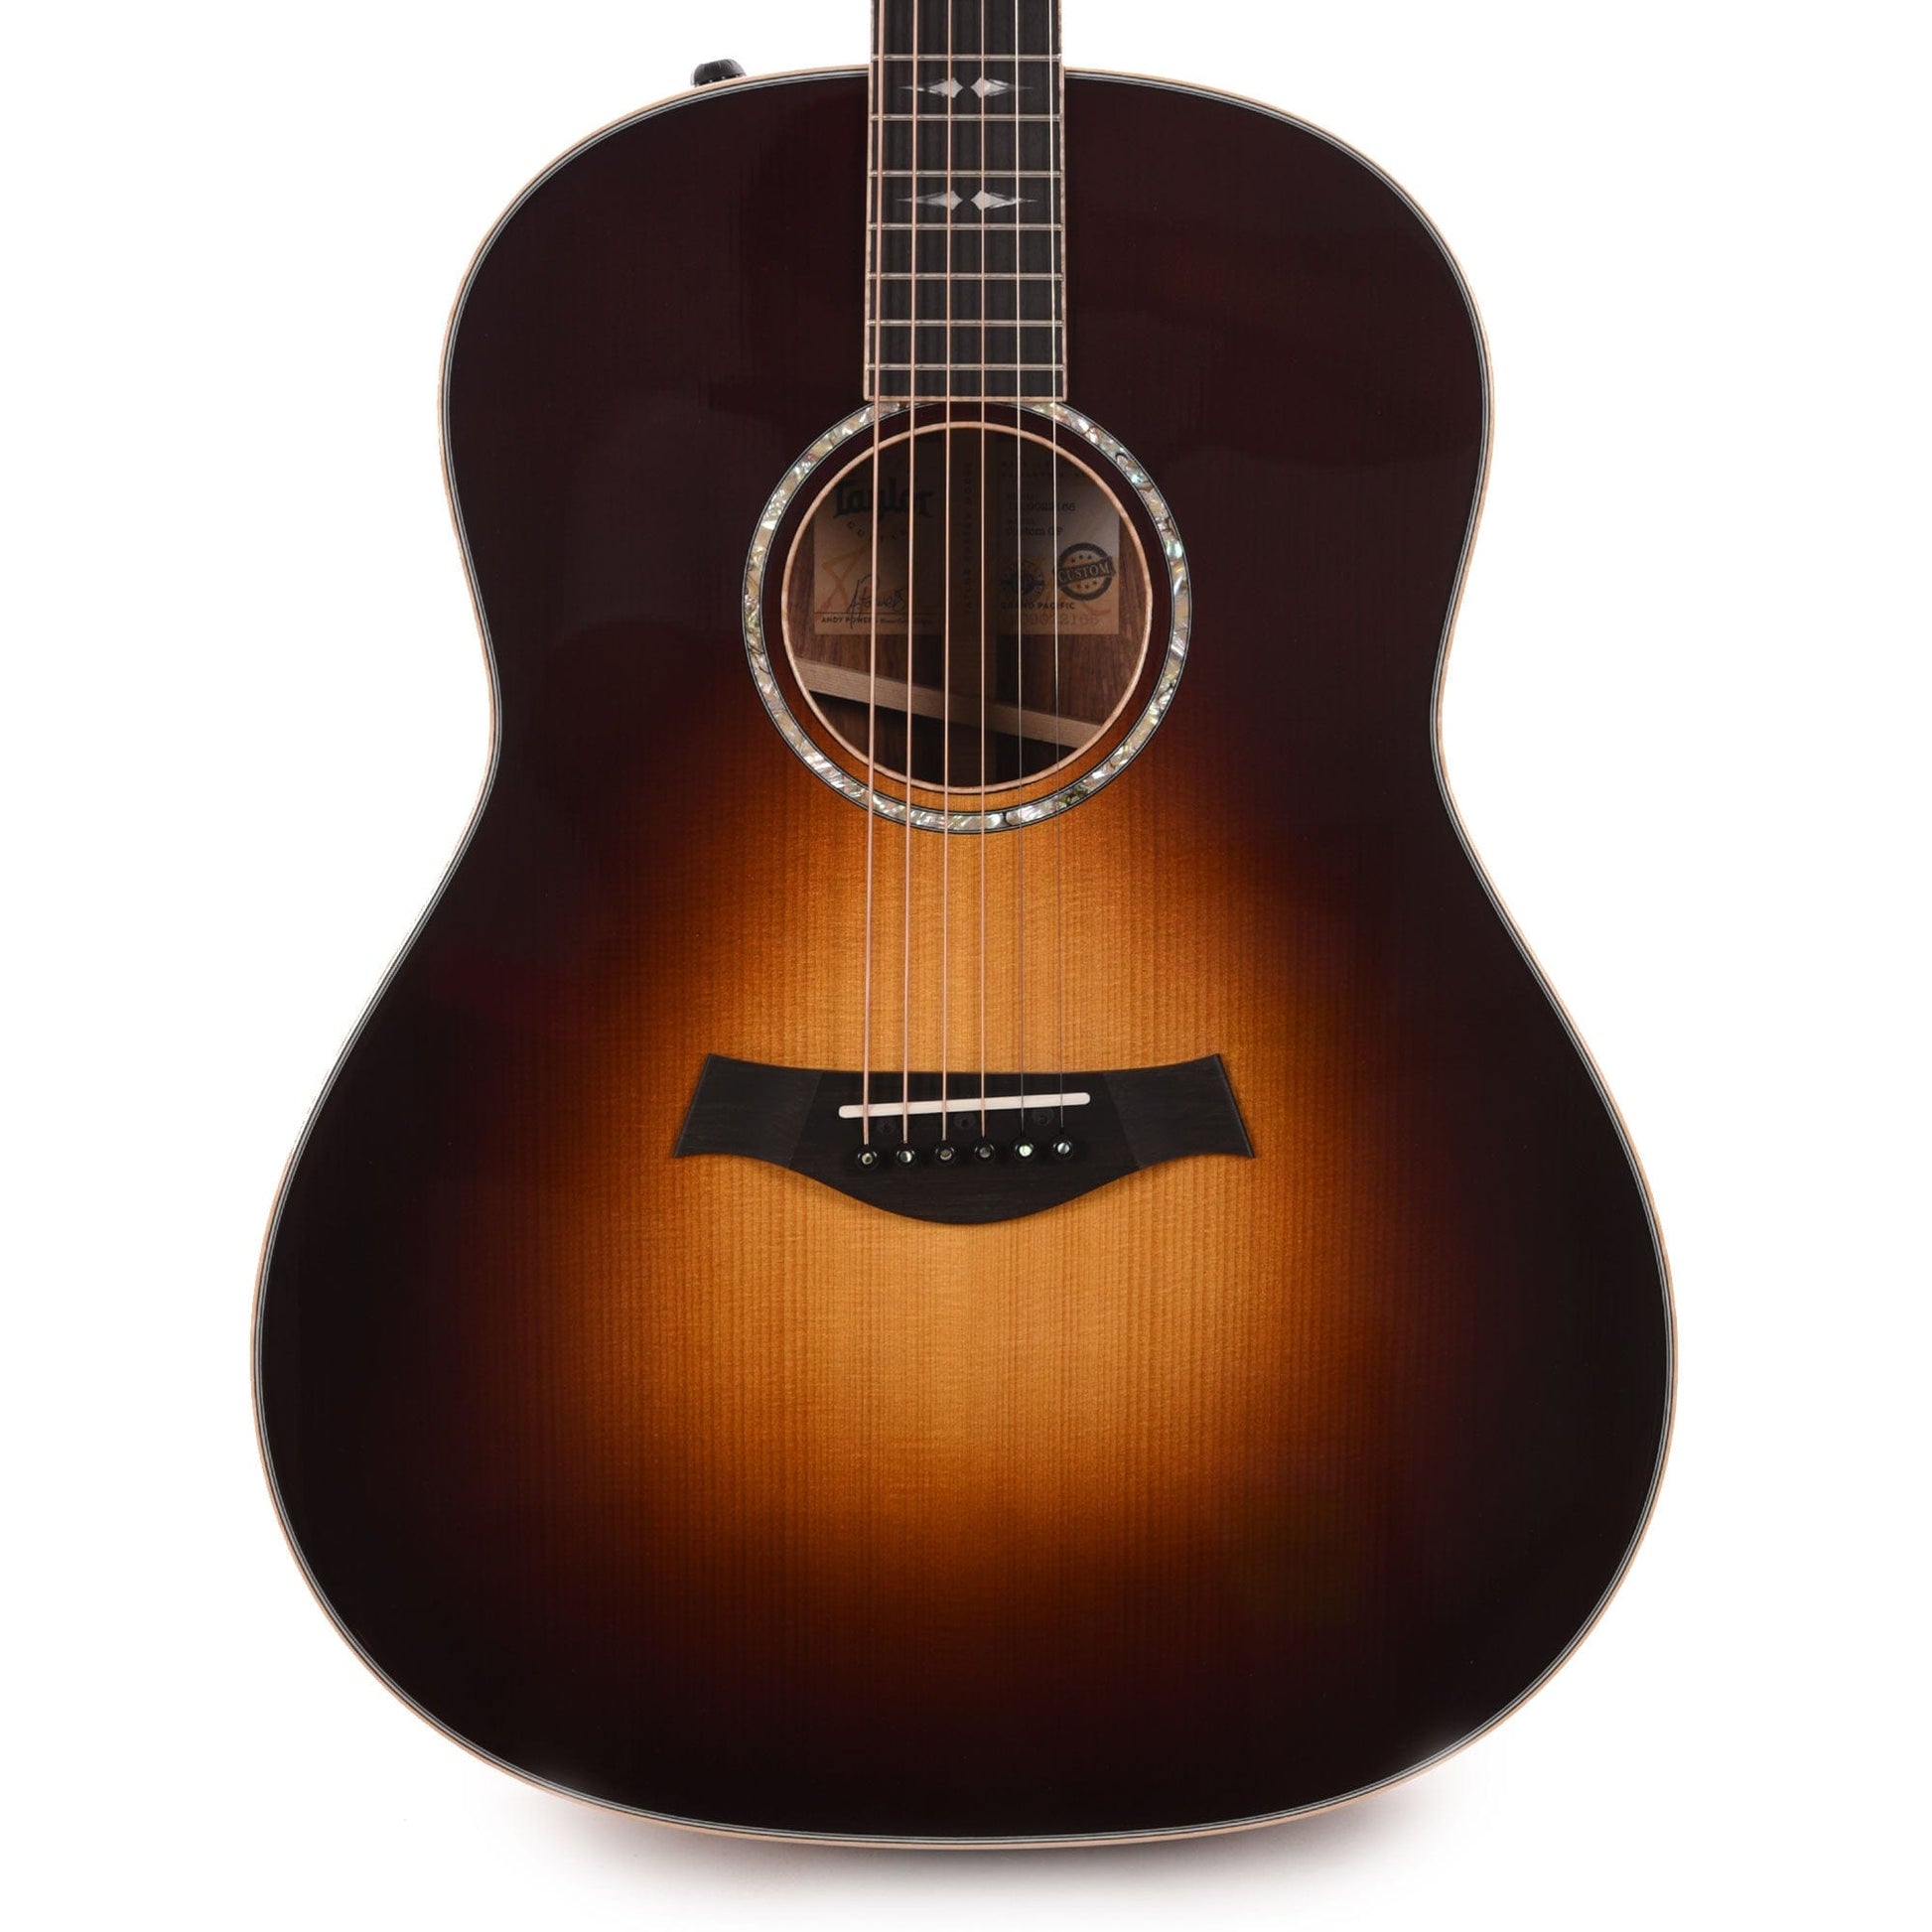 Taylor Custom Grand Pacific Honduran Rosewood & Adirondack Spruce VIntage Sunburst Top w/Figured Maple Binding & Figured Mahogany Neck Acoustic Guitars / OM and Auditorium